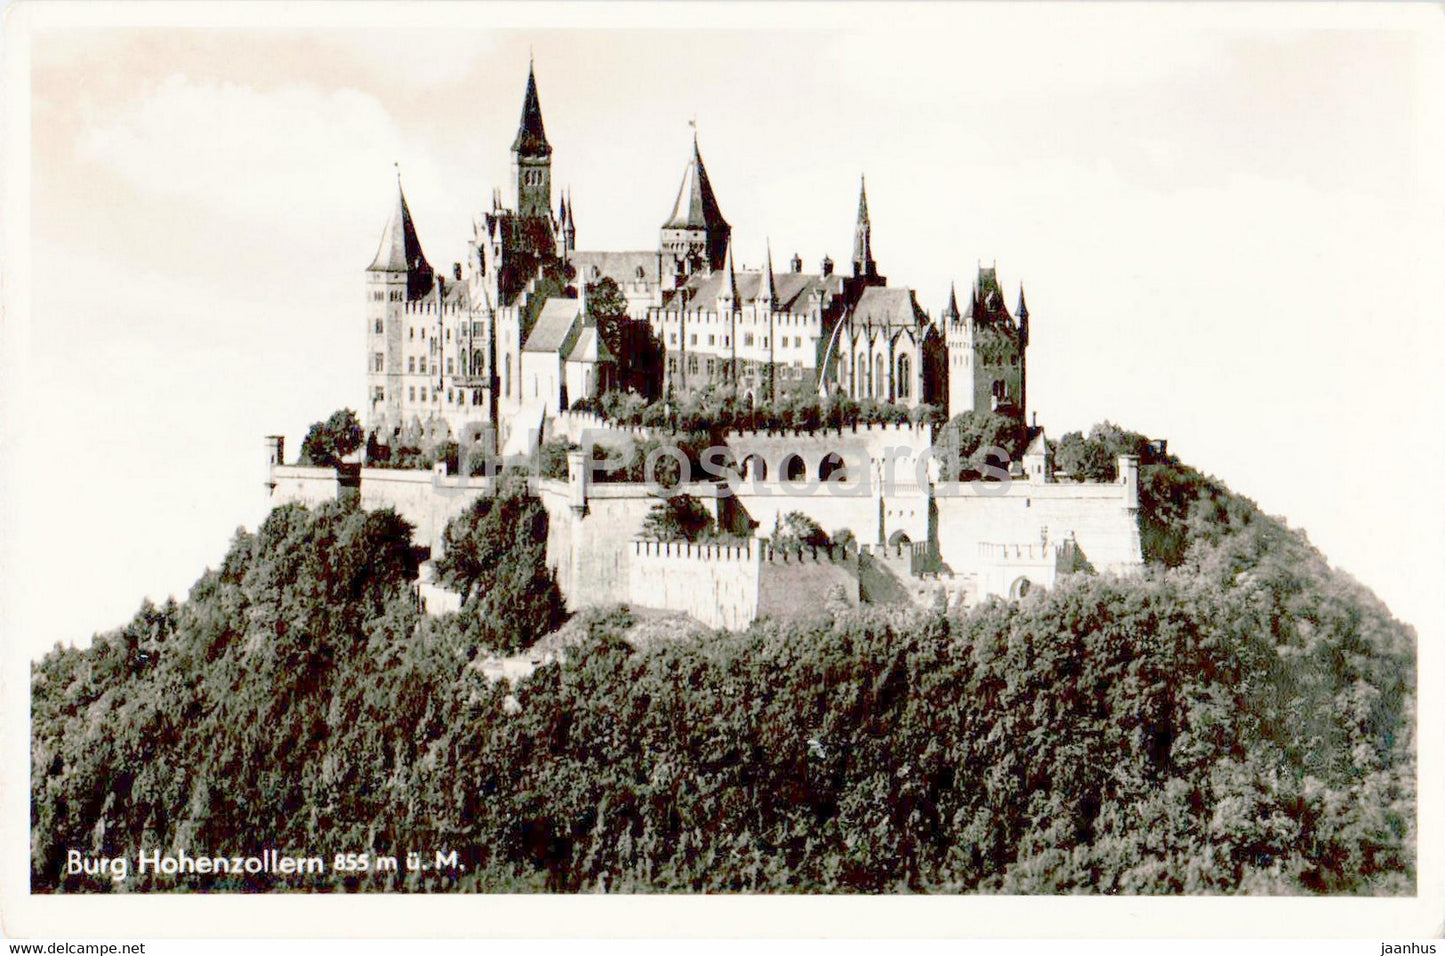 Burg Hohenzollern 855 m - old postcard - Germany - unused - JH Postcards